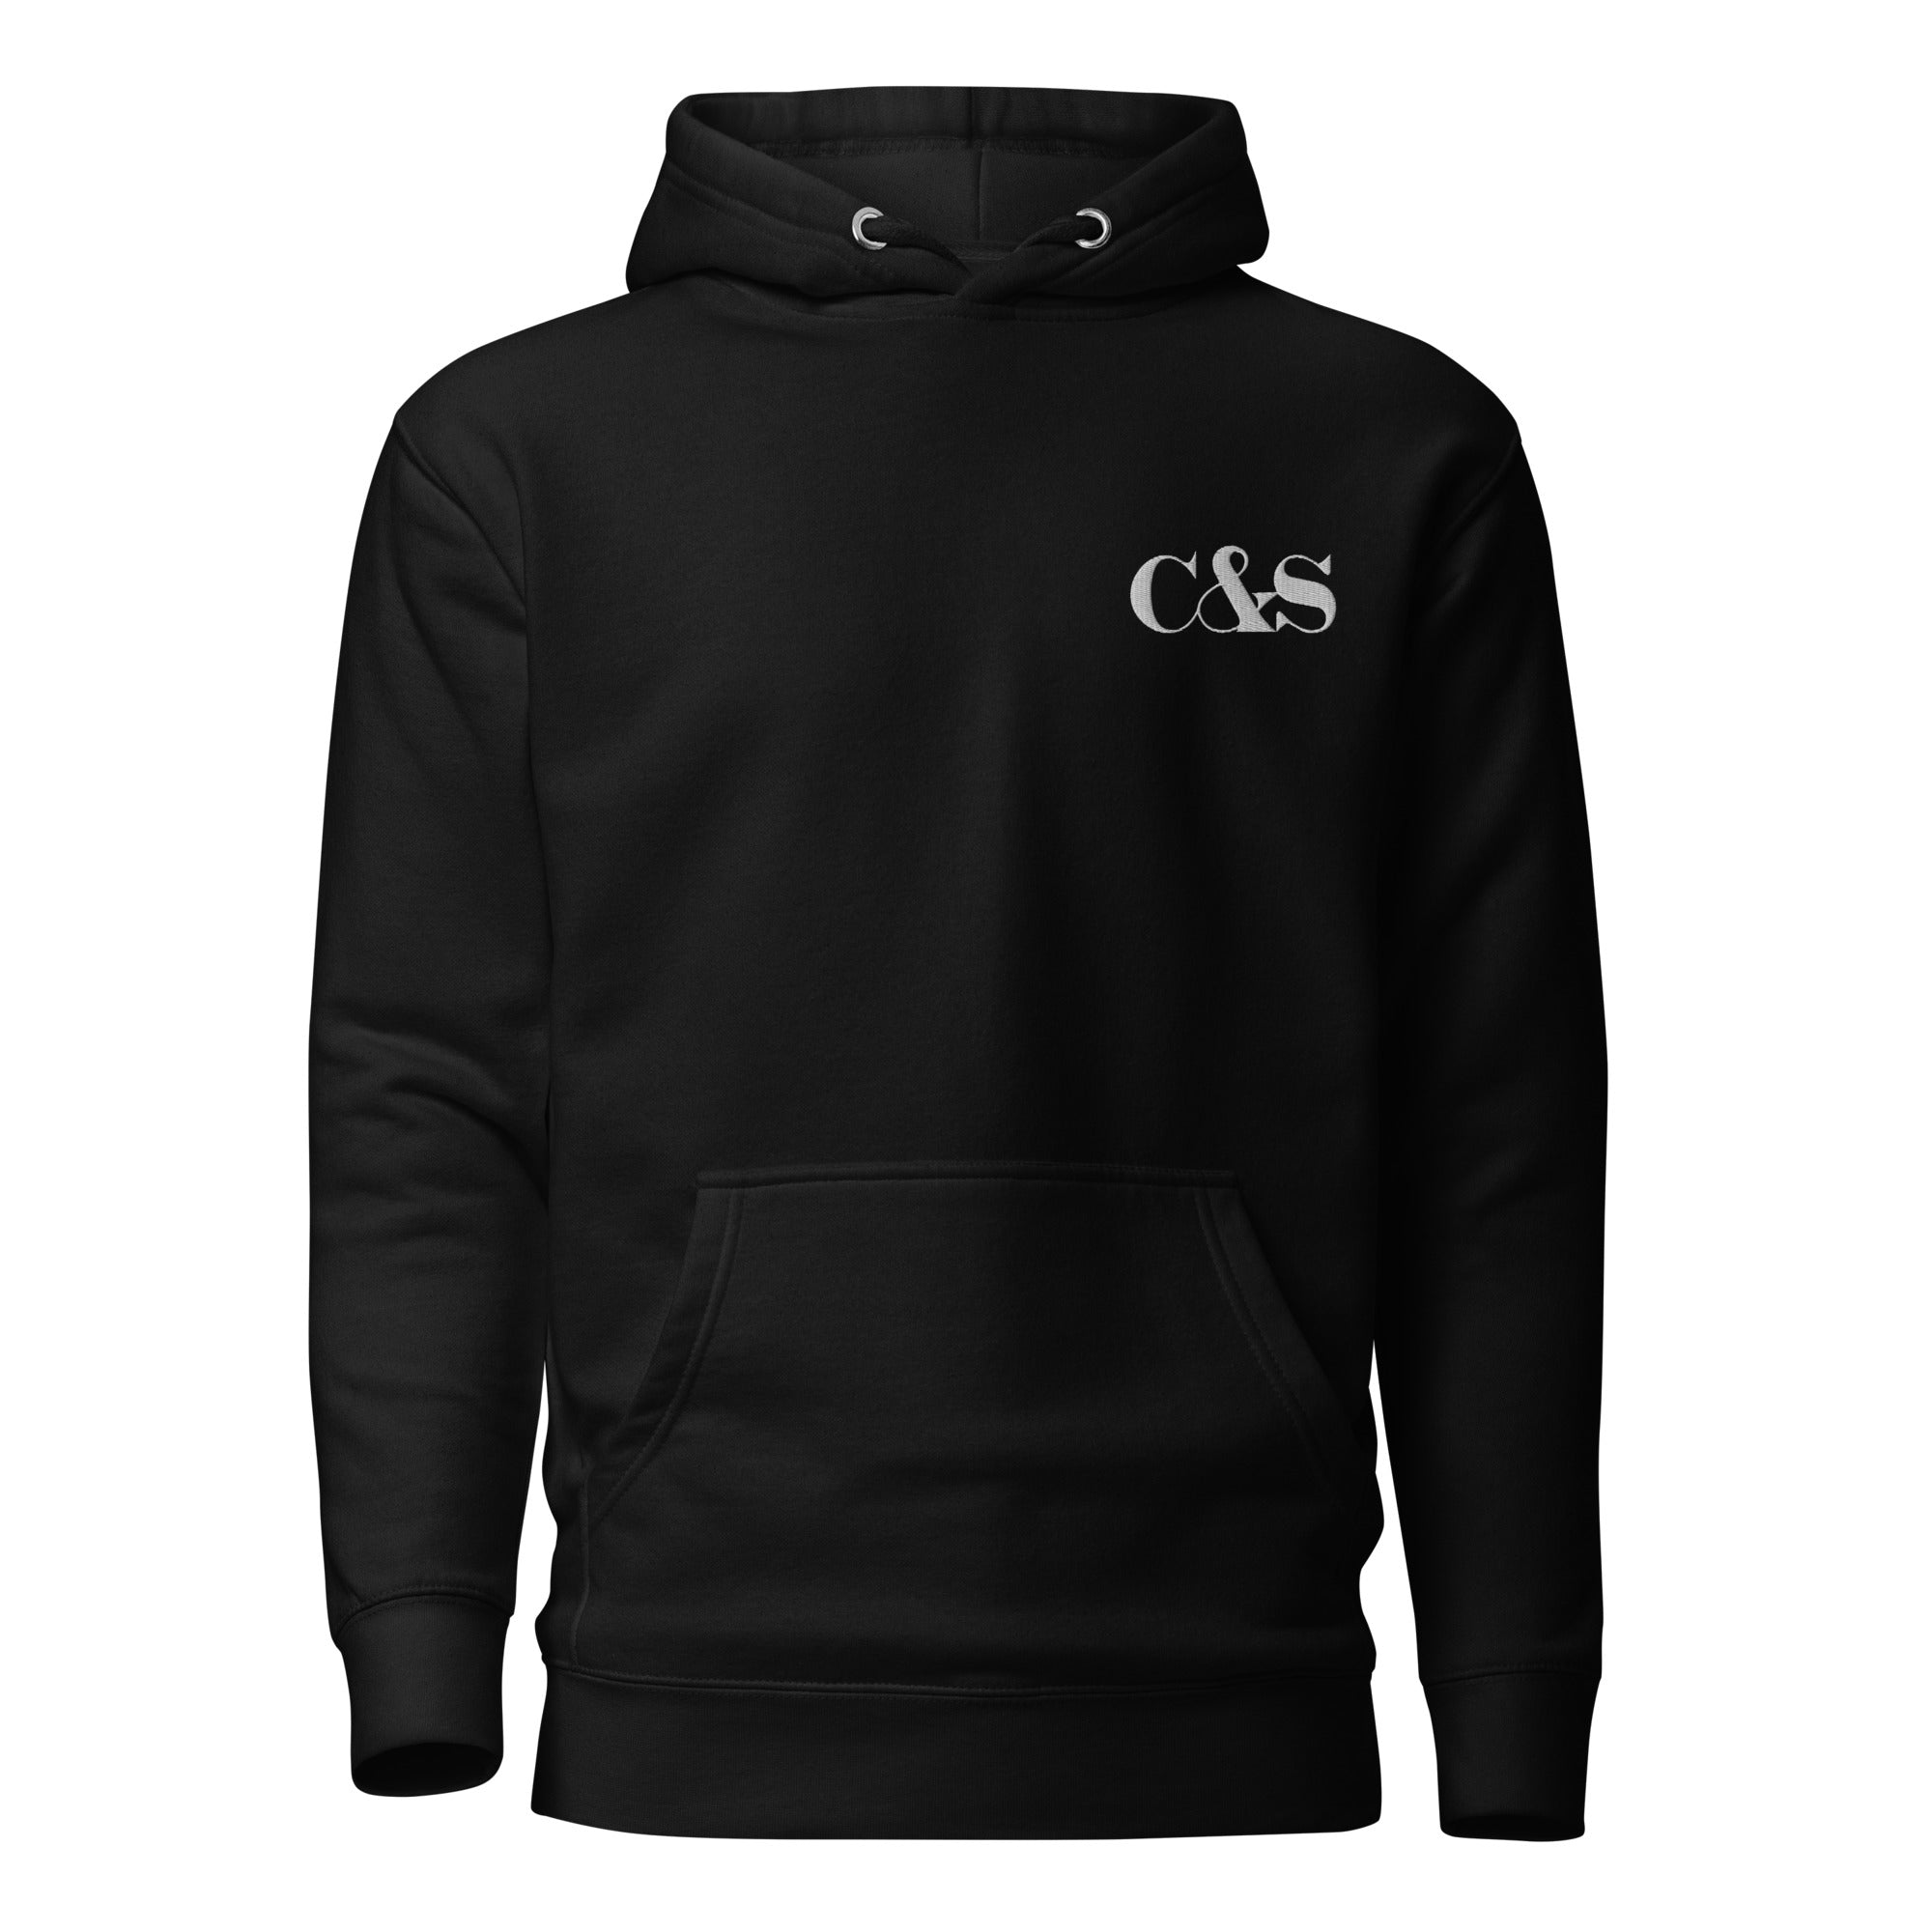 C&S Premium Hoodie (Embroidered)